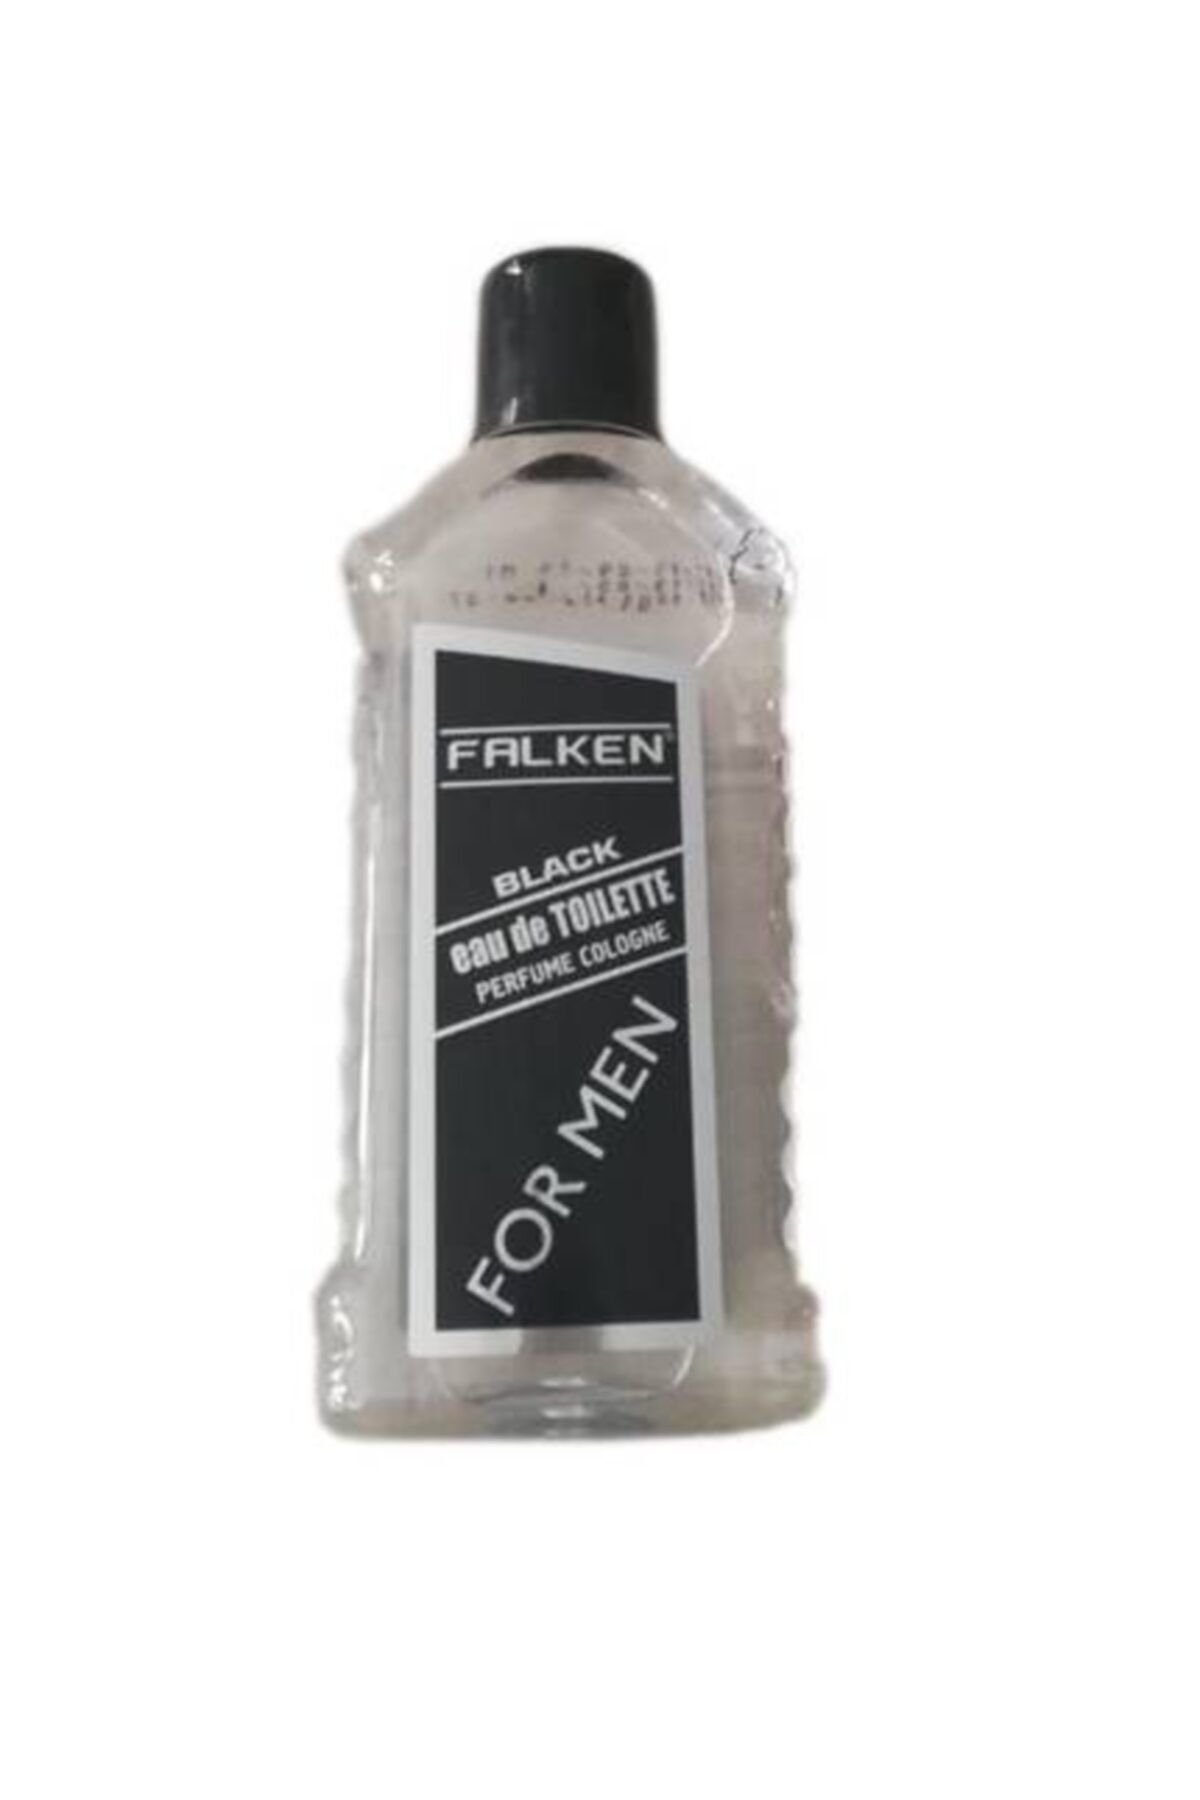 Falken Black Perfume Cologne Pet Şişe Kolonya For Men 200 ml